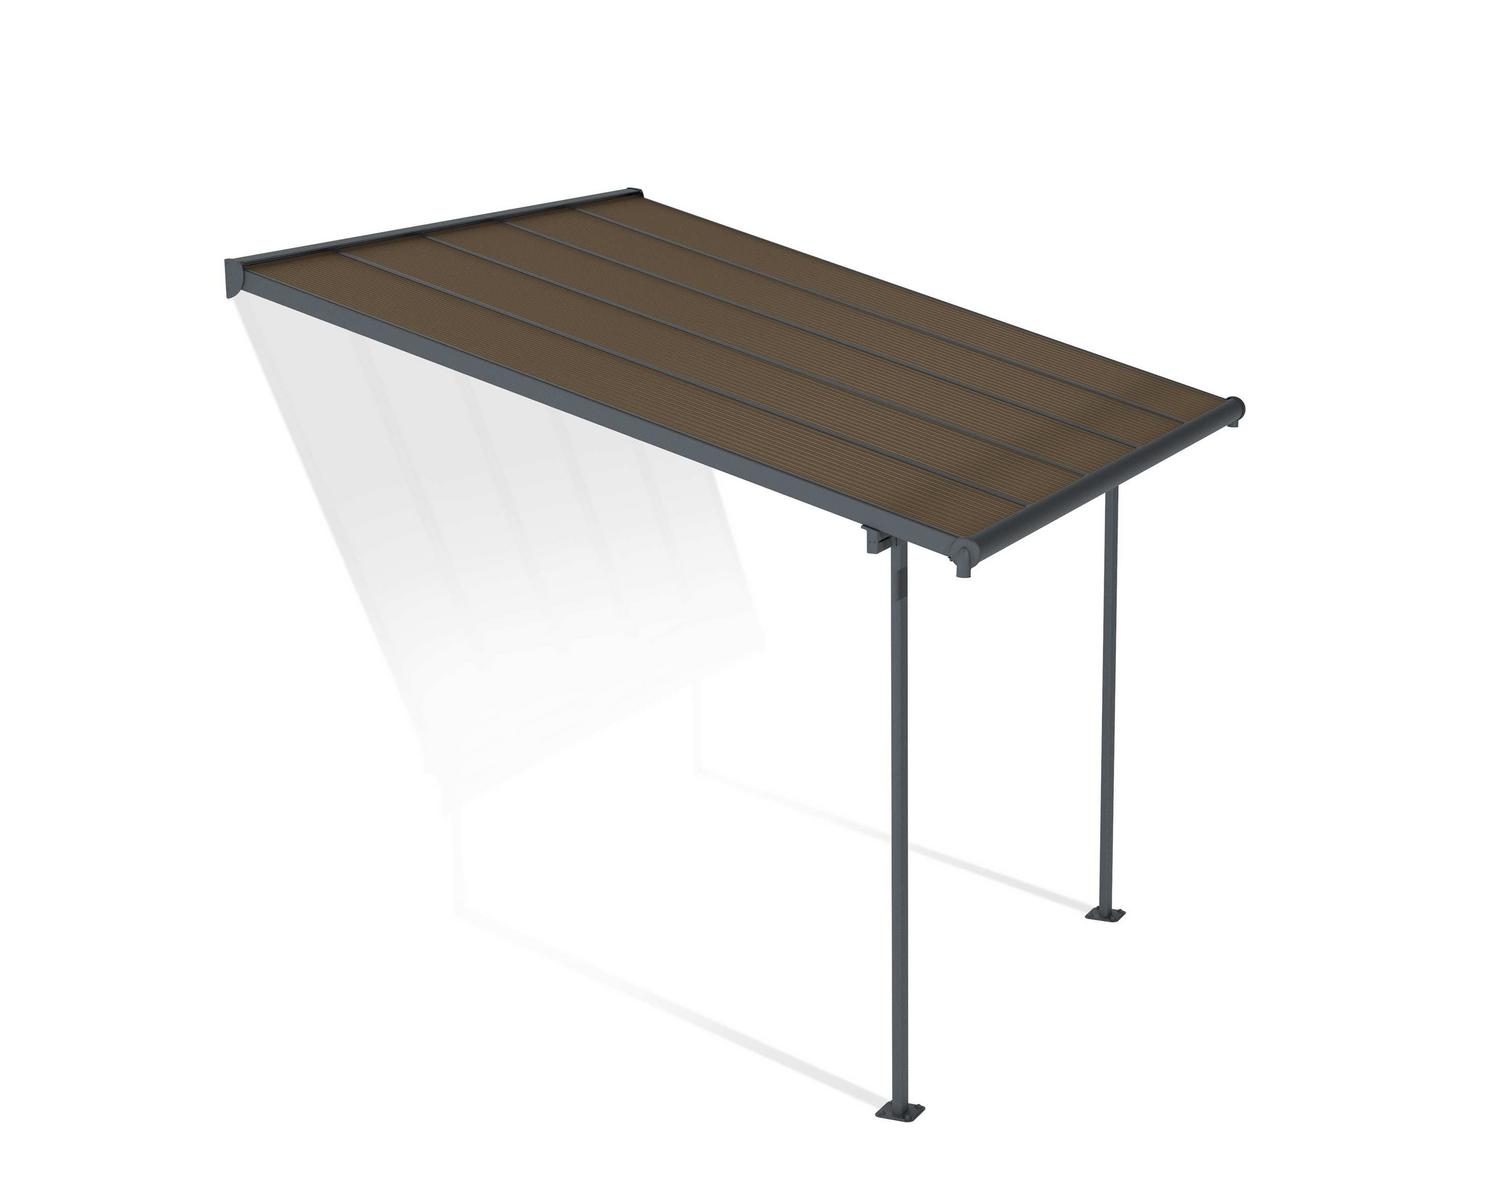 Capri 10 ft. x 10 ft. Patio Cover Kit, Grey Aluminium &amp; Bronze-tinted twin-wall polycarbonate roof panels.